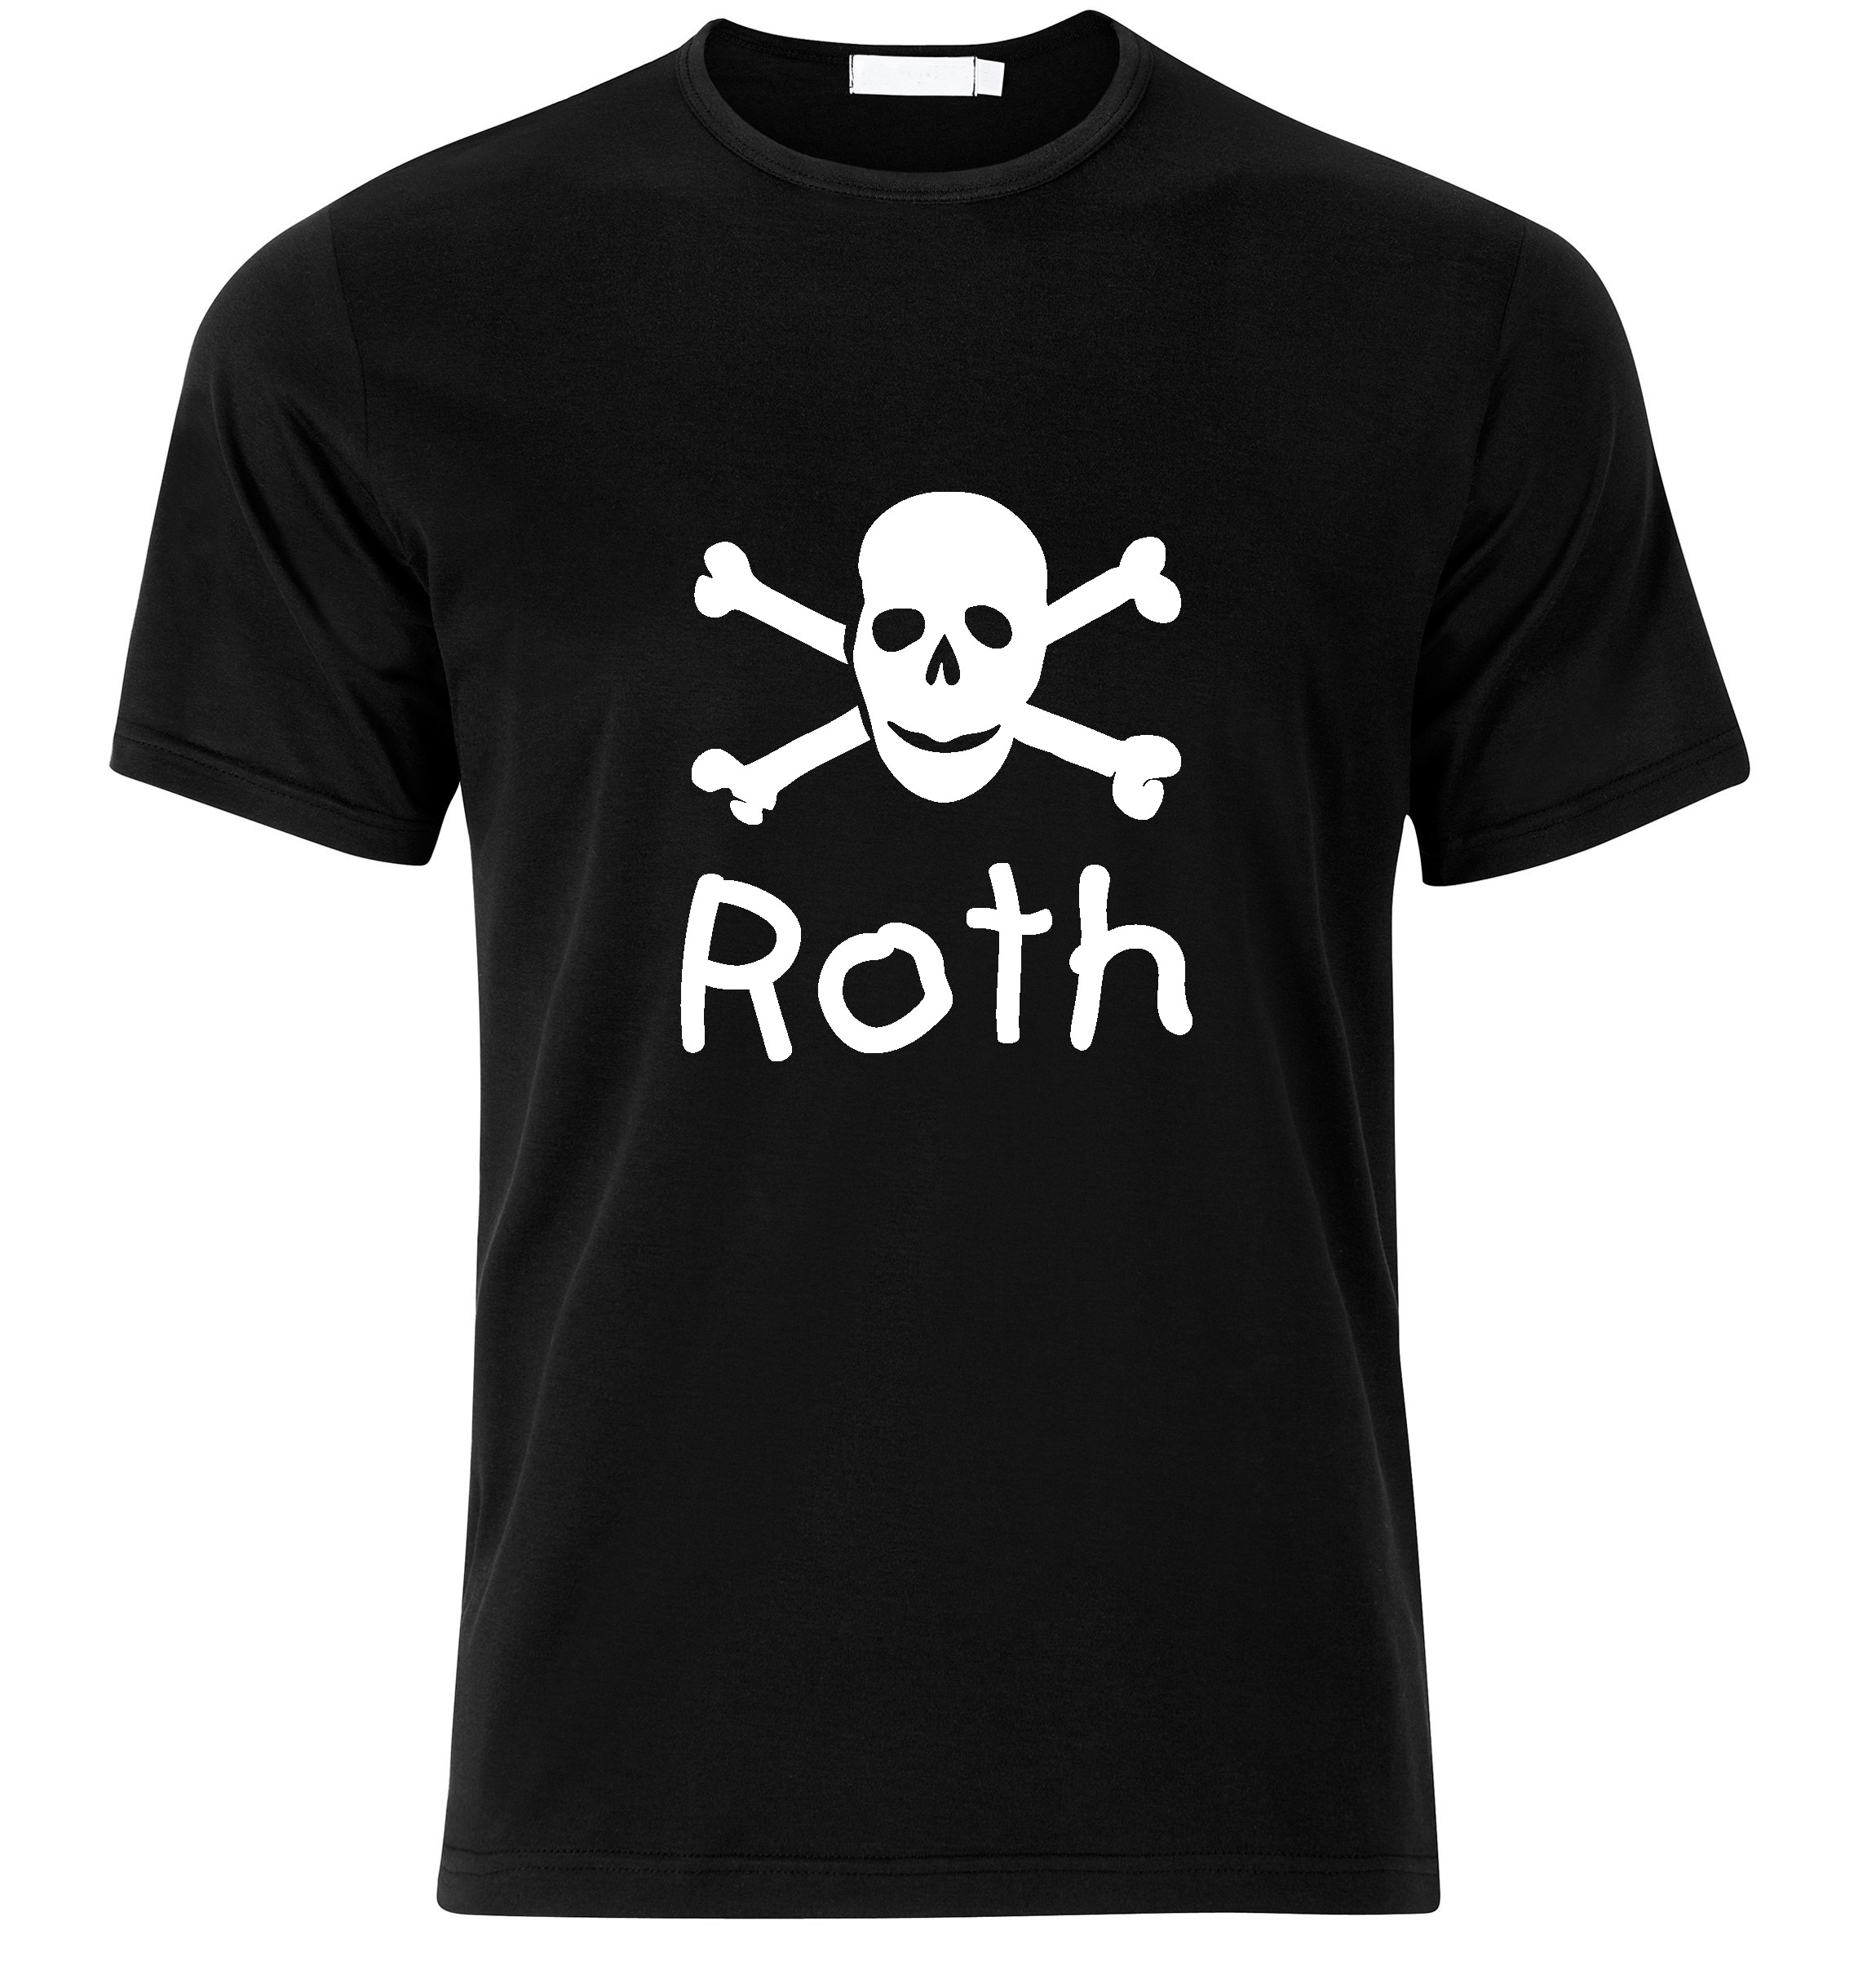 T-Shirt Roth Jolly Roger, Totenkopf